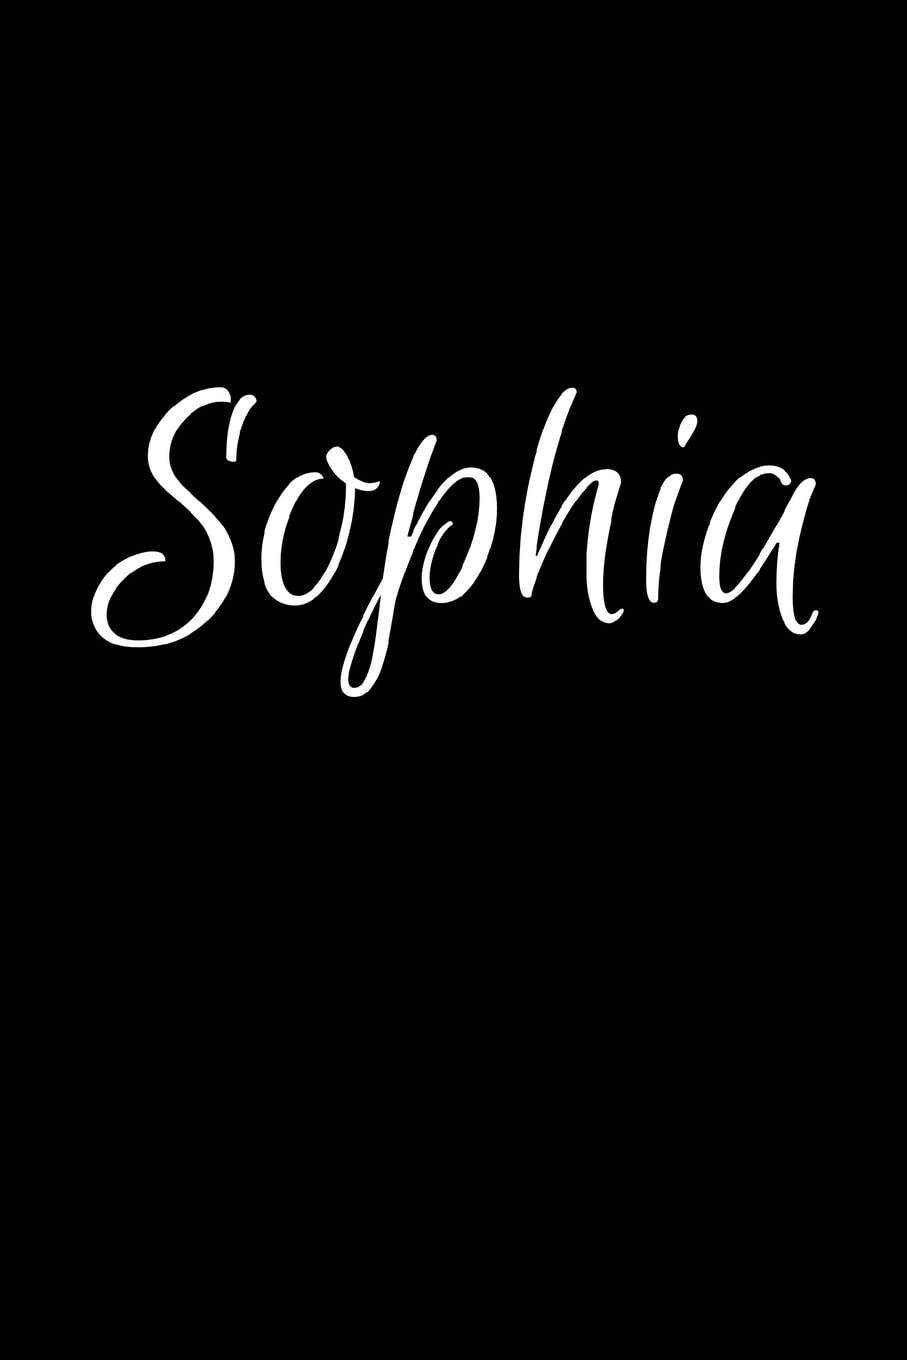 Sophia: Notebook Journal for Women or Girl with the name Sophia ...